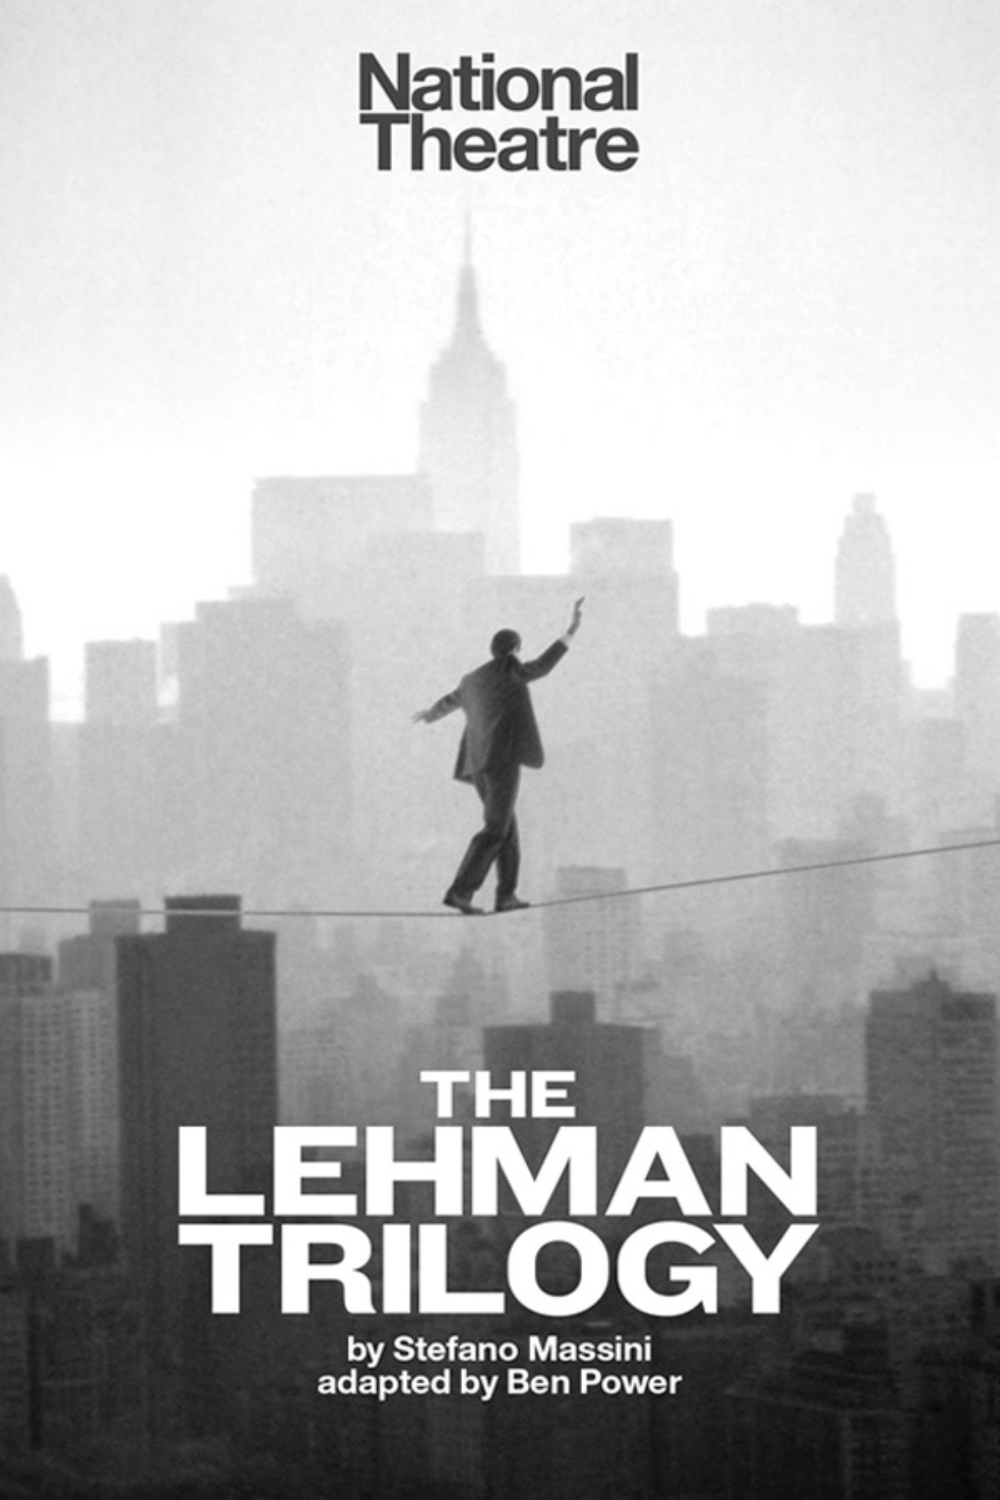 Ben Power, The Lehman Trilogy Poster.png